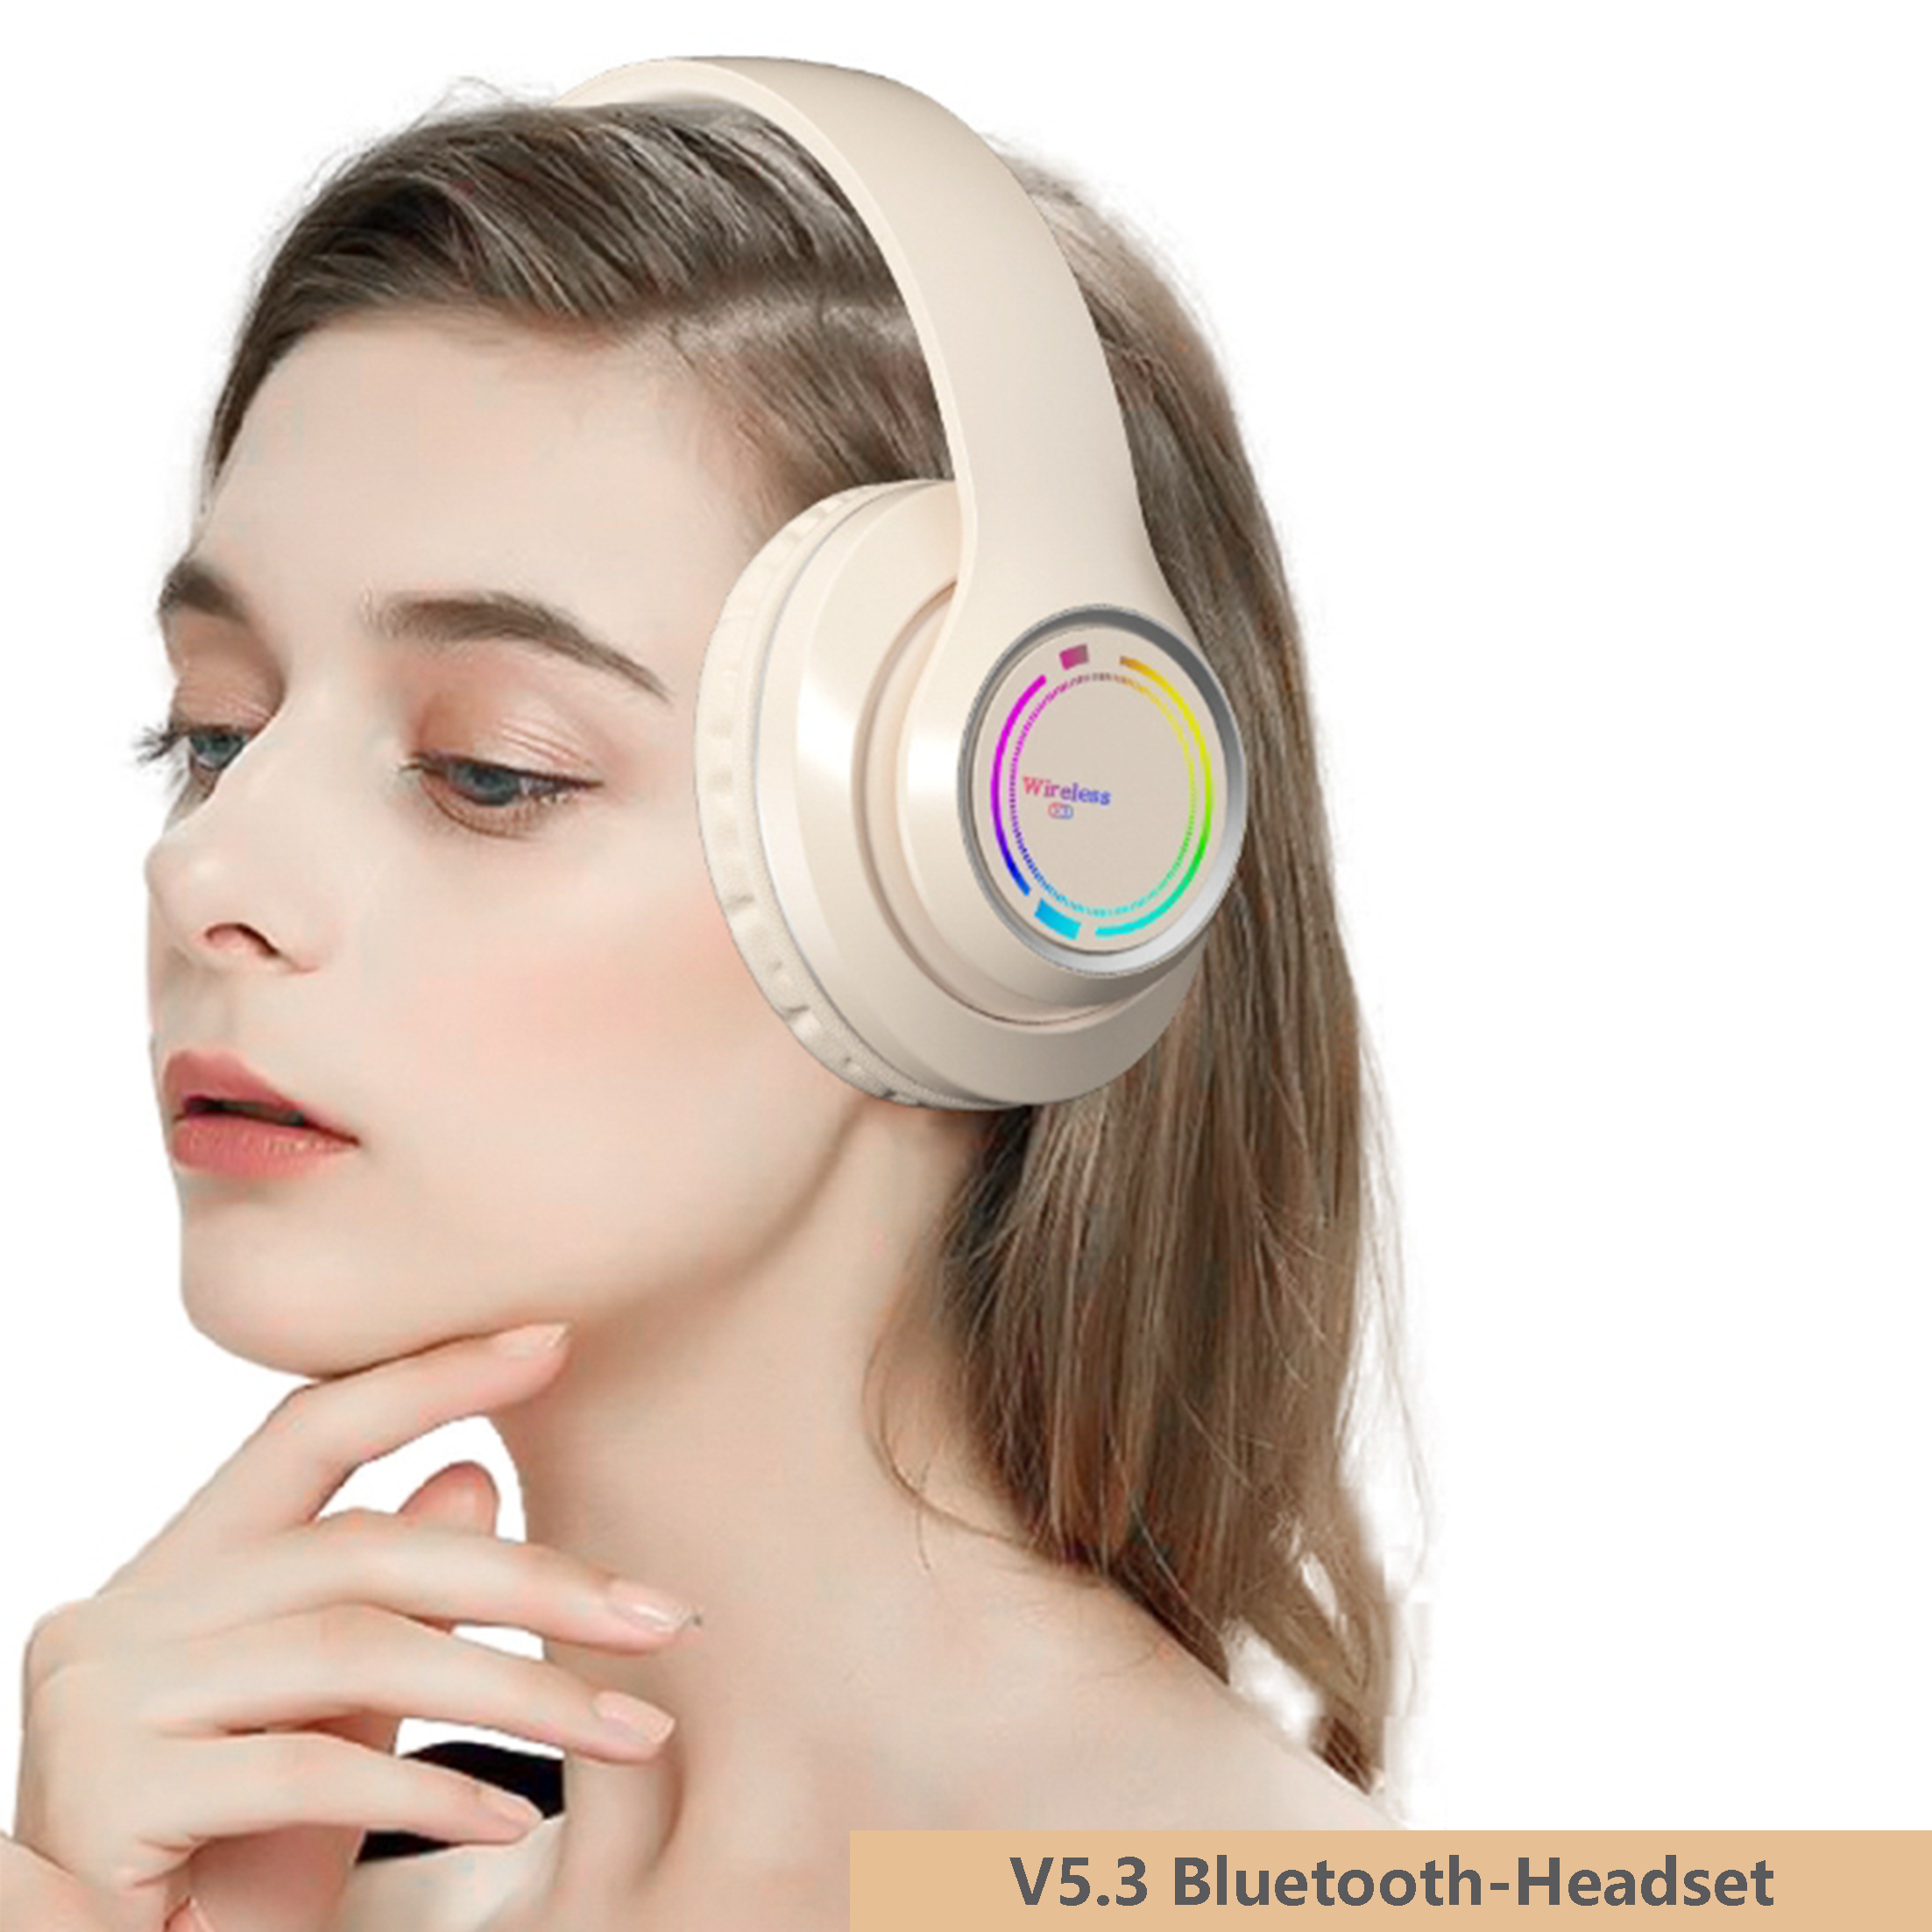 KINSI V3 Drahtlos,Spiele,RGB, Over-ear Kopfhörer Rosa Bluetooth